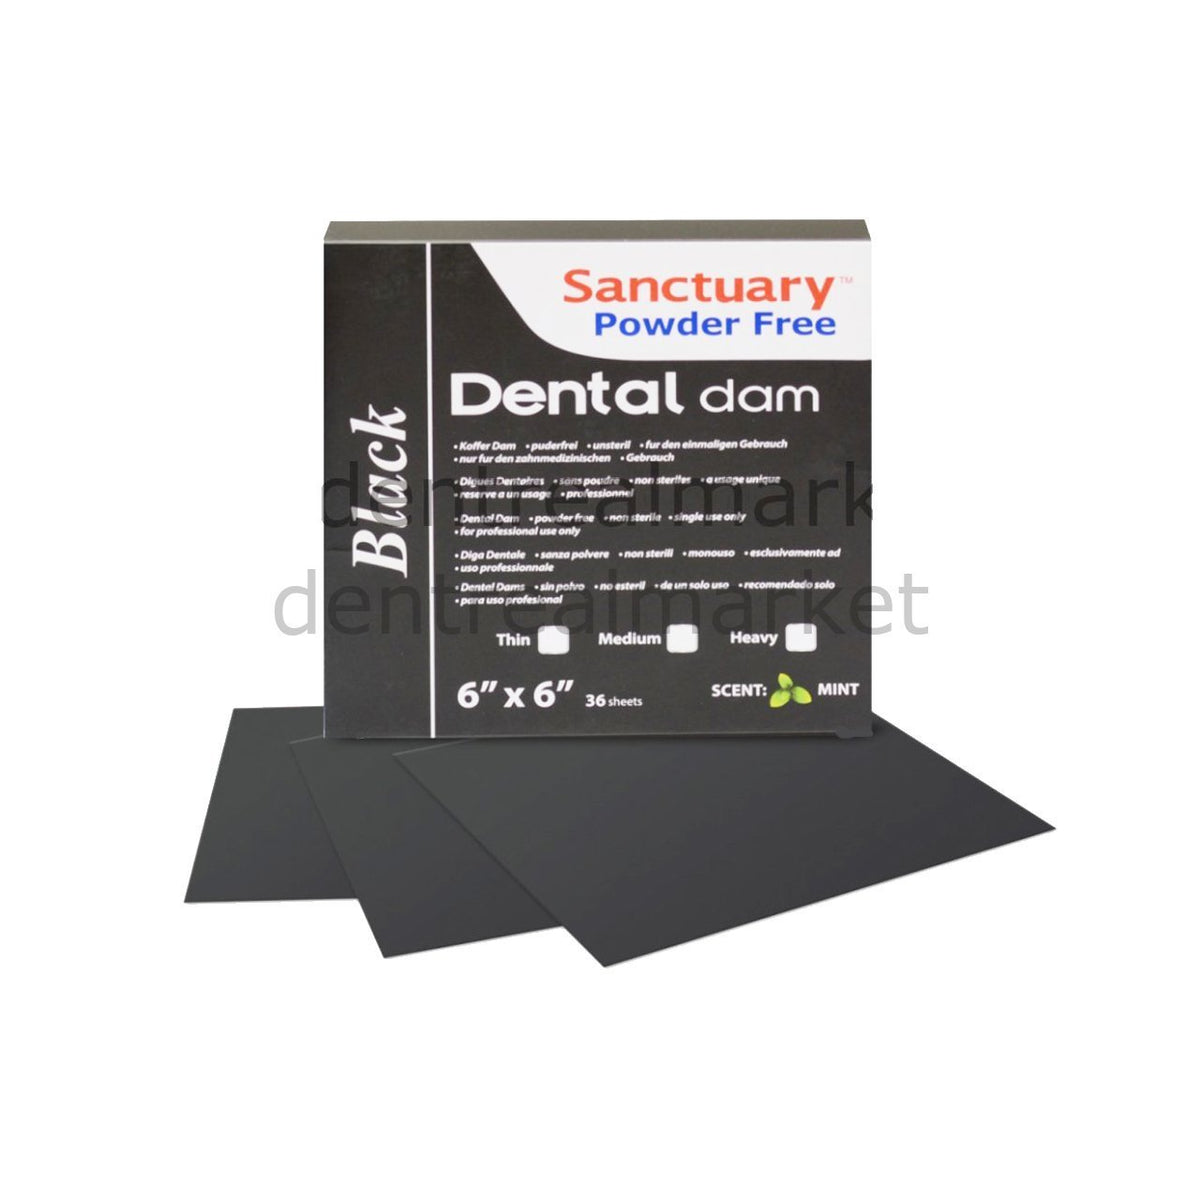 DentrealStore - Sanctuary Dental Dam Rubberdam Black